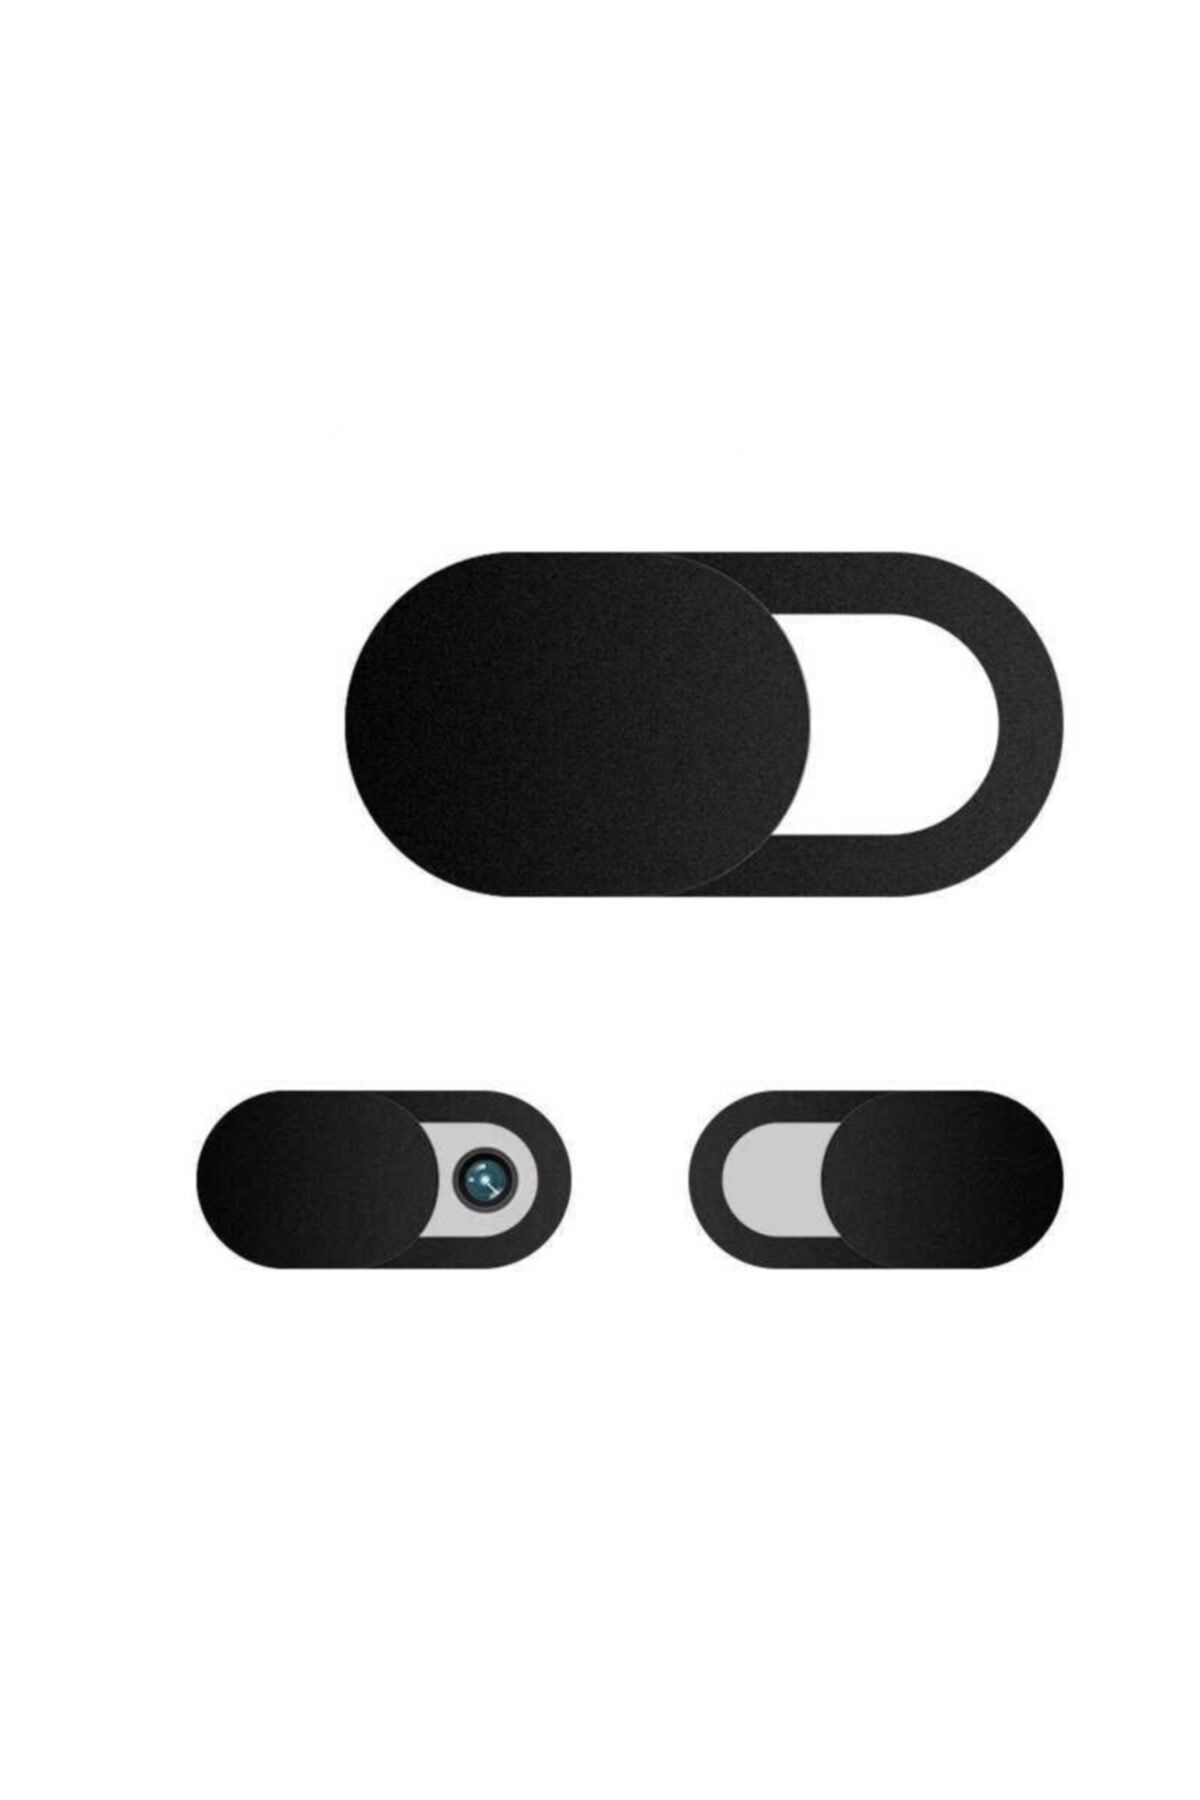 MOBAX Webcam Kamera Kapatıcı Kapakları Sticer Privacy Protection Cover